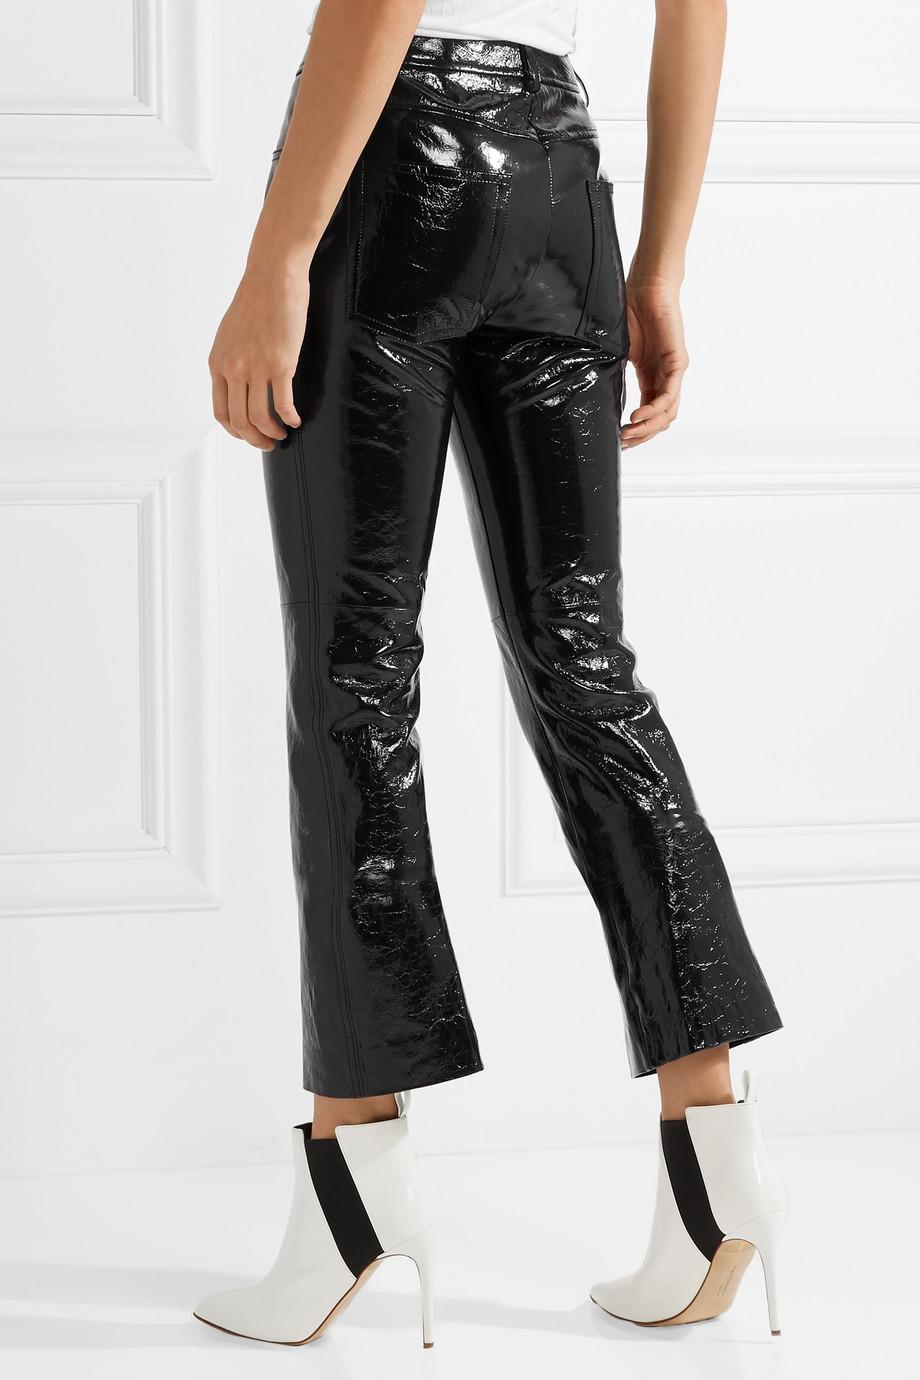 Lyst - Helmut Lang Crinkled Patent-leather Slim-leg Pants in Black